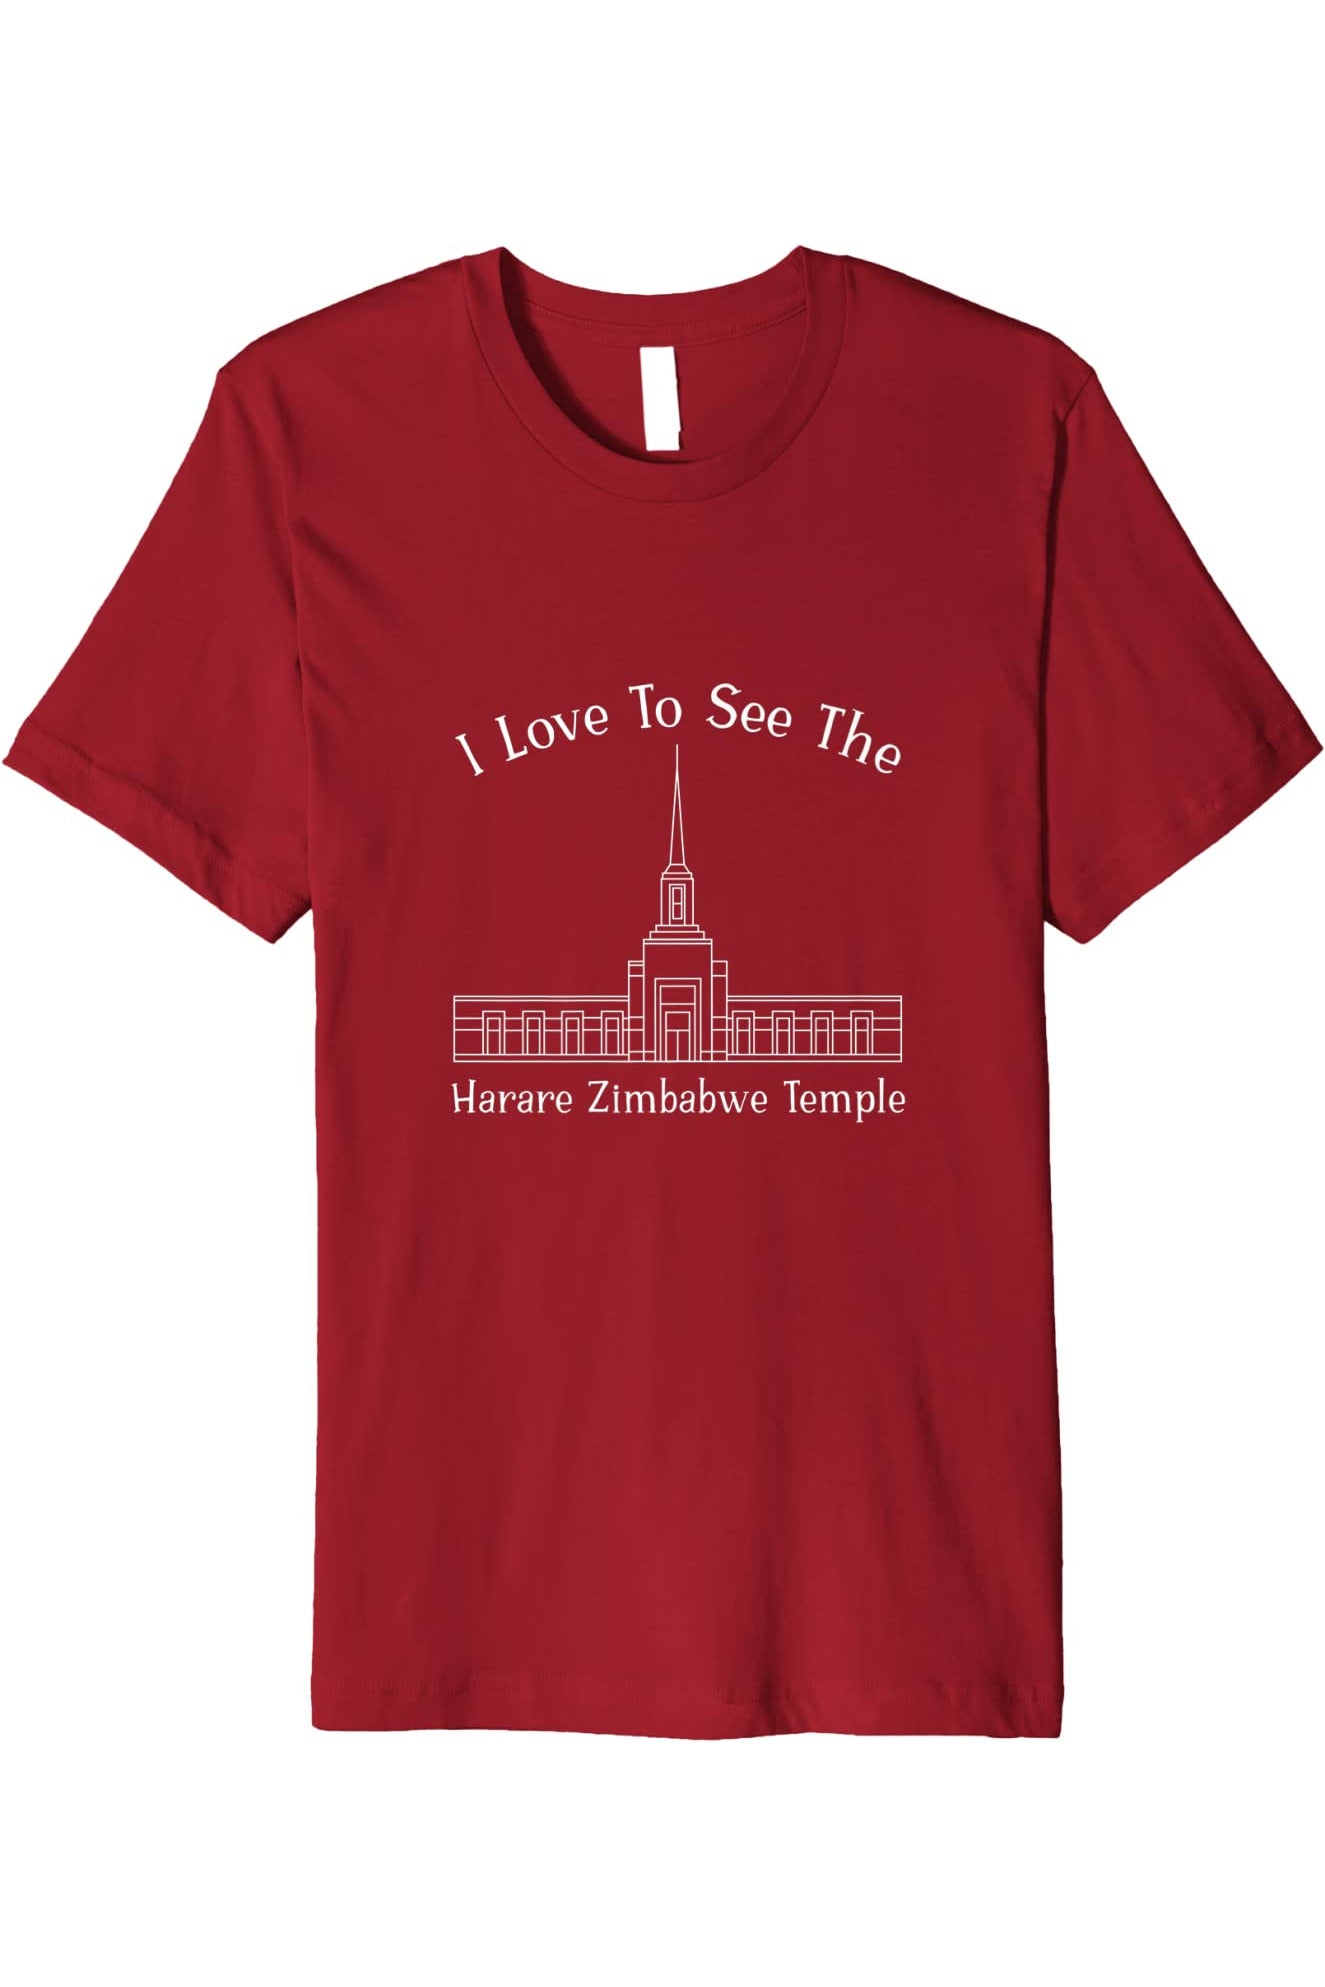 Harare Zimbabwe Temple T-Shirt - Premium - Happy Style (English) US